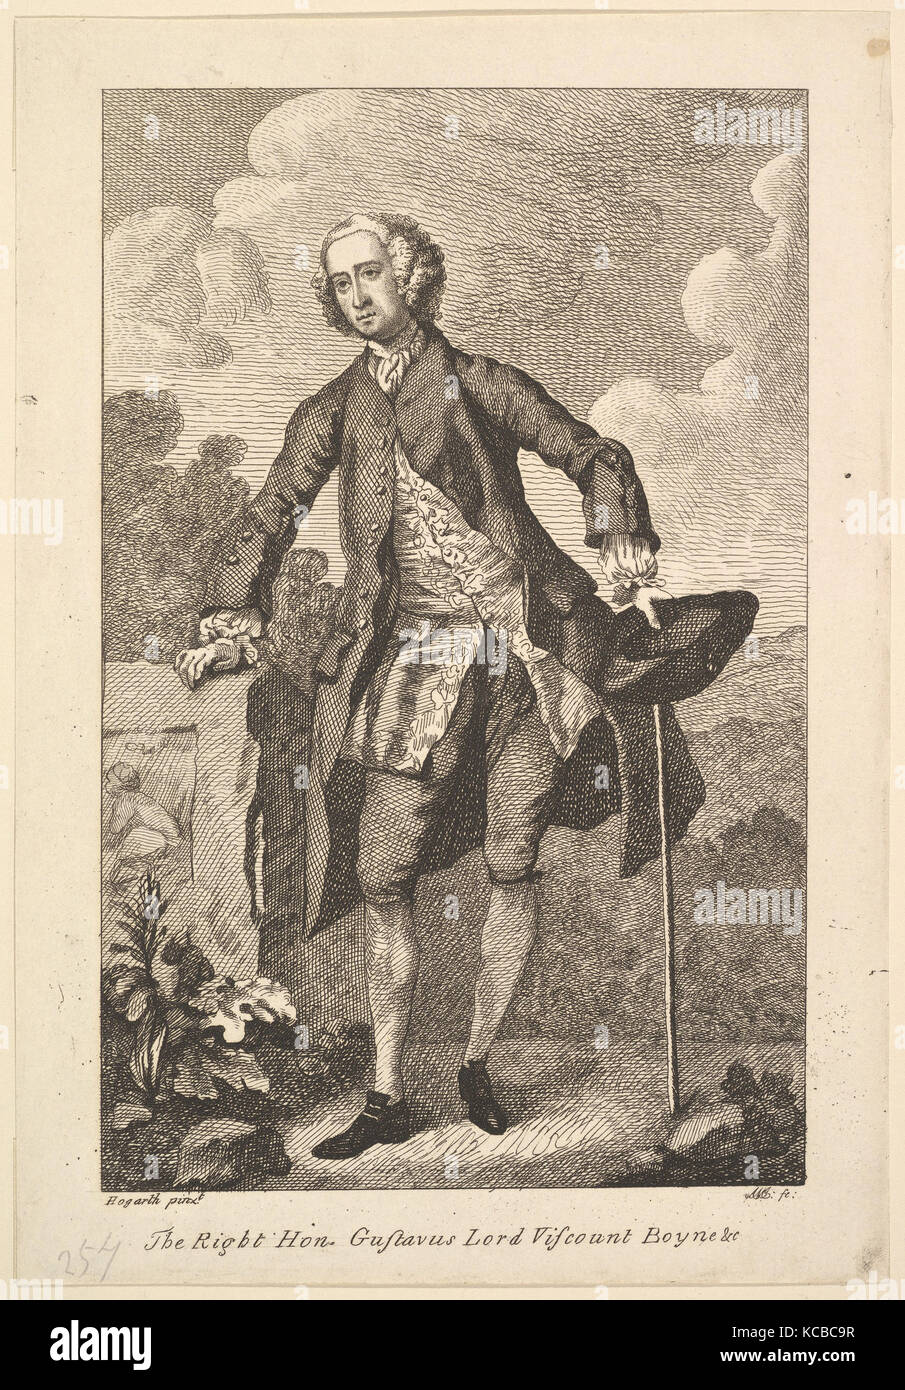 The Right Hon. Gustavus Lord Viscount Boyne &c., After William Hogarth, 1794 Stock Photo